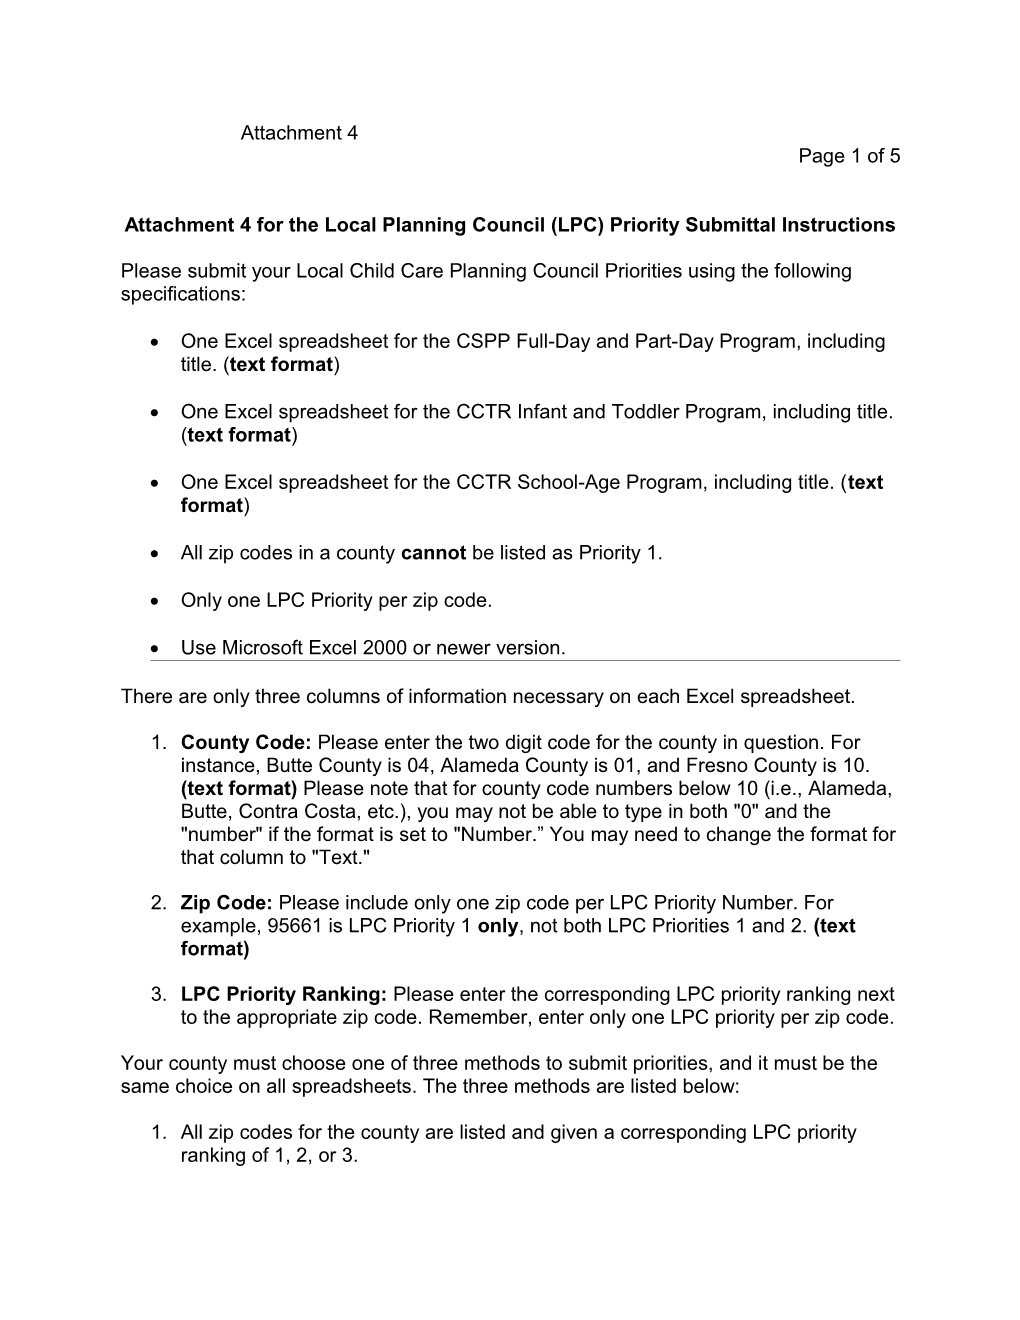 MB 15-04 LPC Priorities Submittal - Child Development (CA Dept of Education)